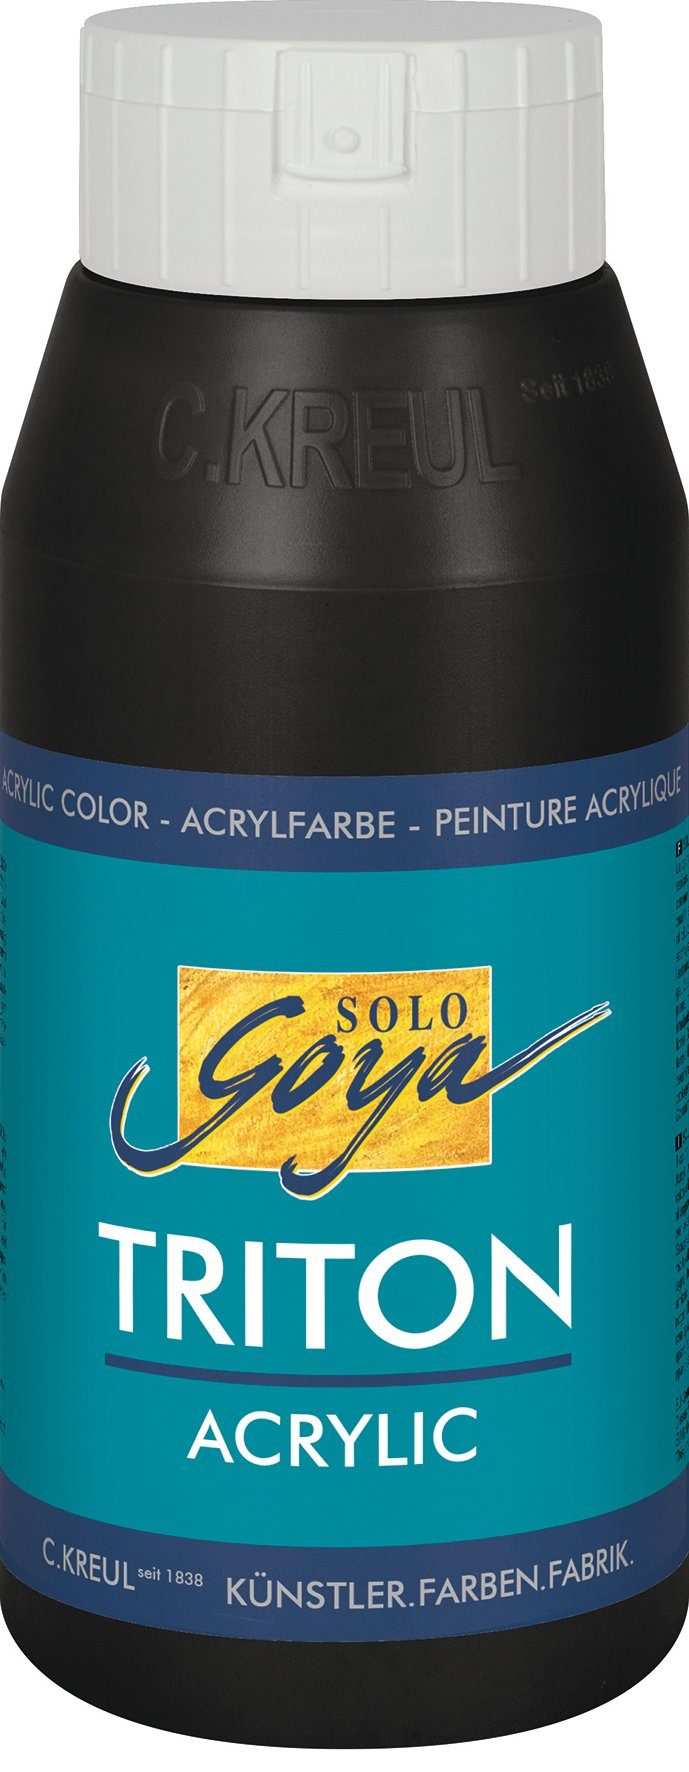 Kreul Acrylfarbe Solo Triton Acrylic, ml Goya 750 Schwarz